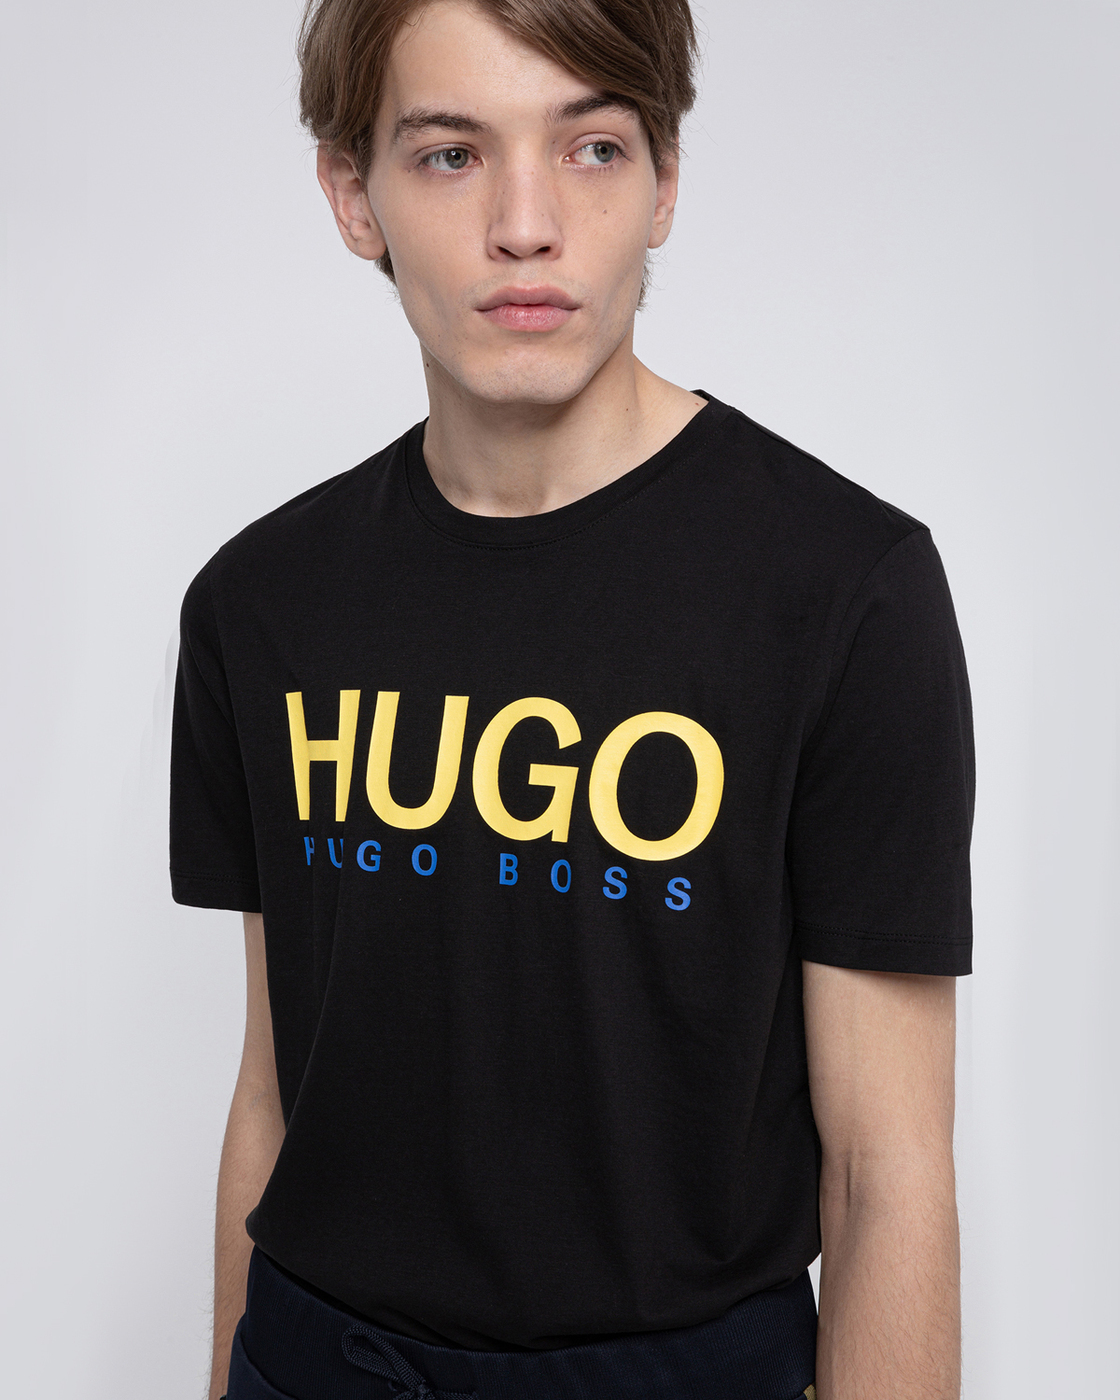 Футболка Hugo. Hugo футболка мужская. Футболка Hugo Dulivio. Футболка Hugo Boss мужская черная. Hugo размеры